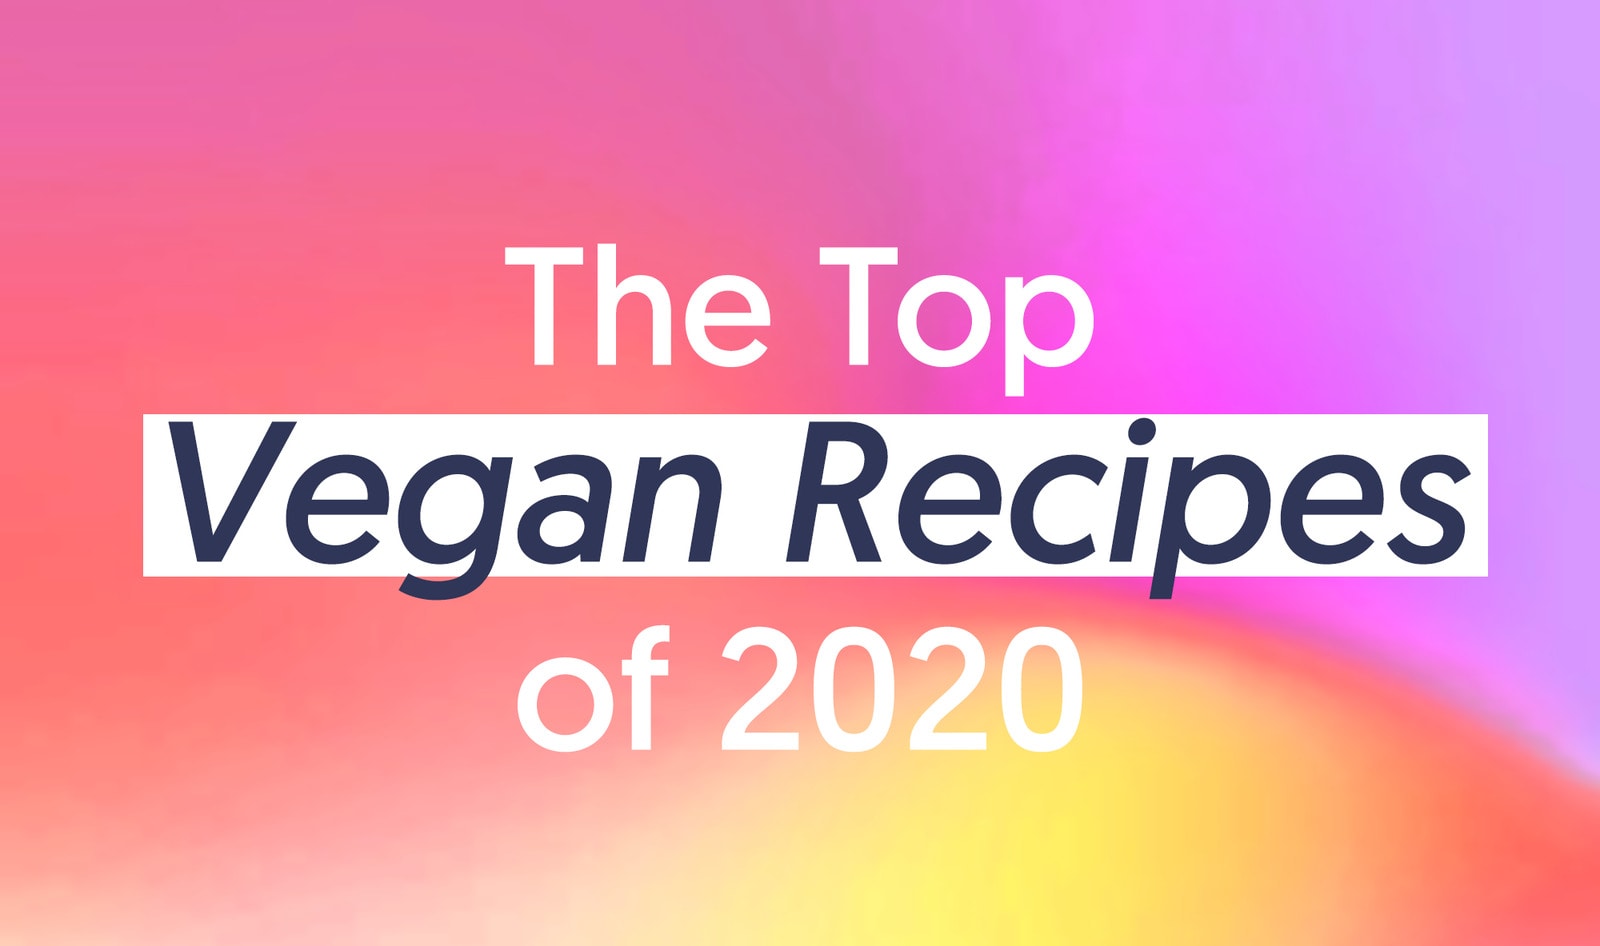 The Top 20 Vegan Recipes of 2020